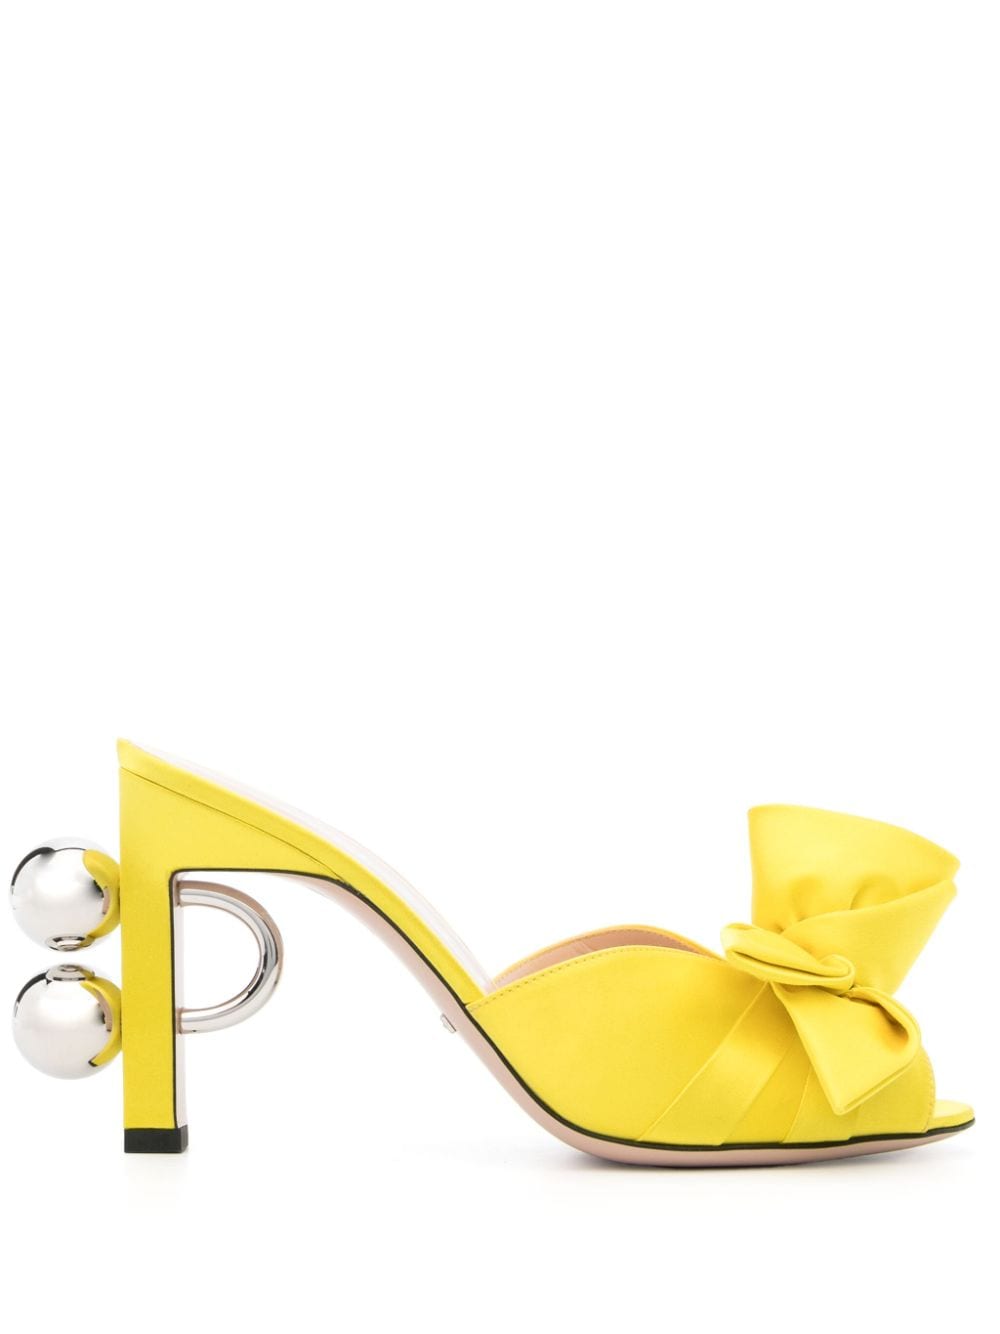 Gucci rose open-toe sandals - Yellow von Gucci